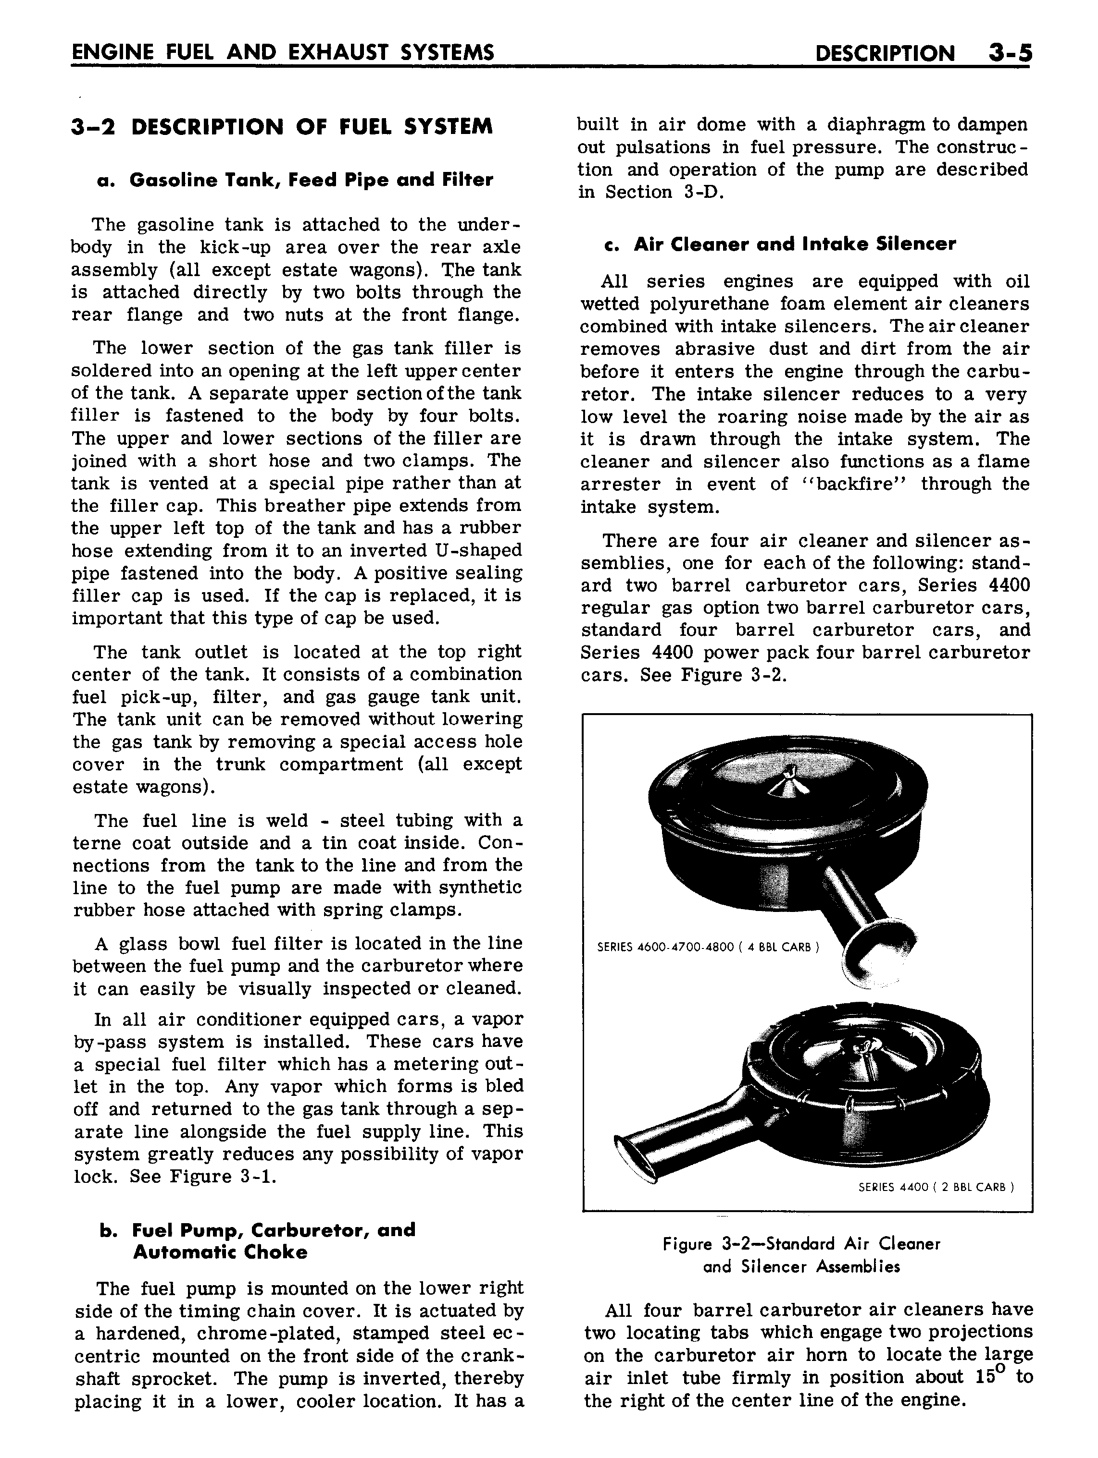 n_04 1961 Buick Shop Manual - Engine Fuel & Exhaust-005-005.jpg